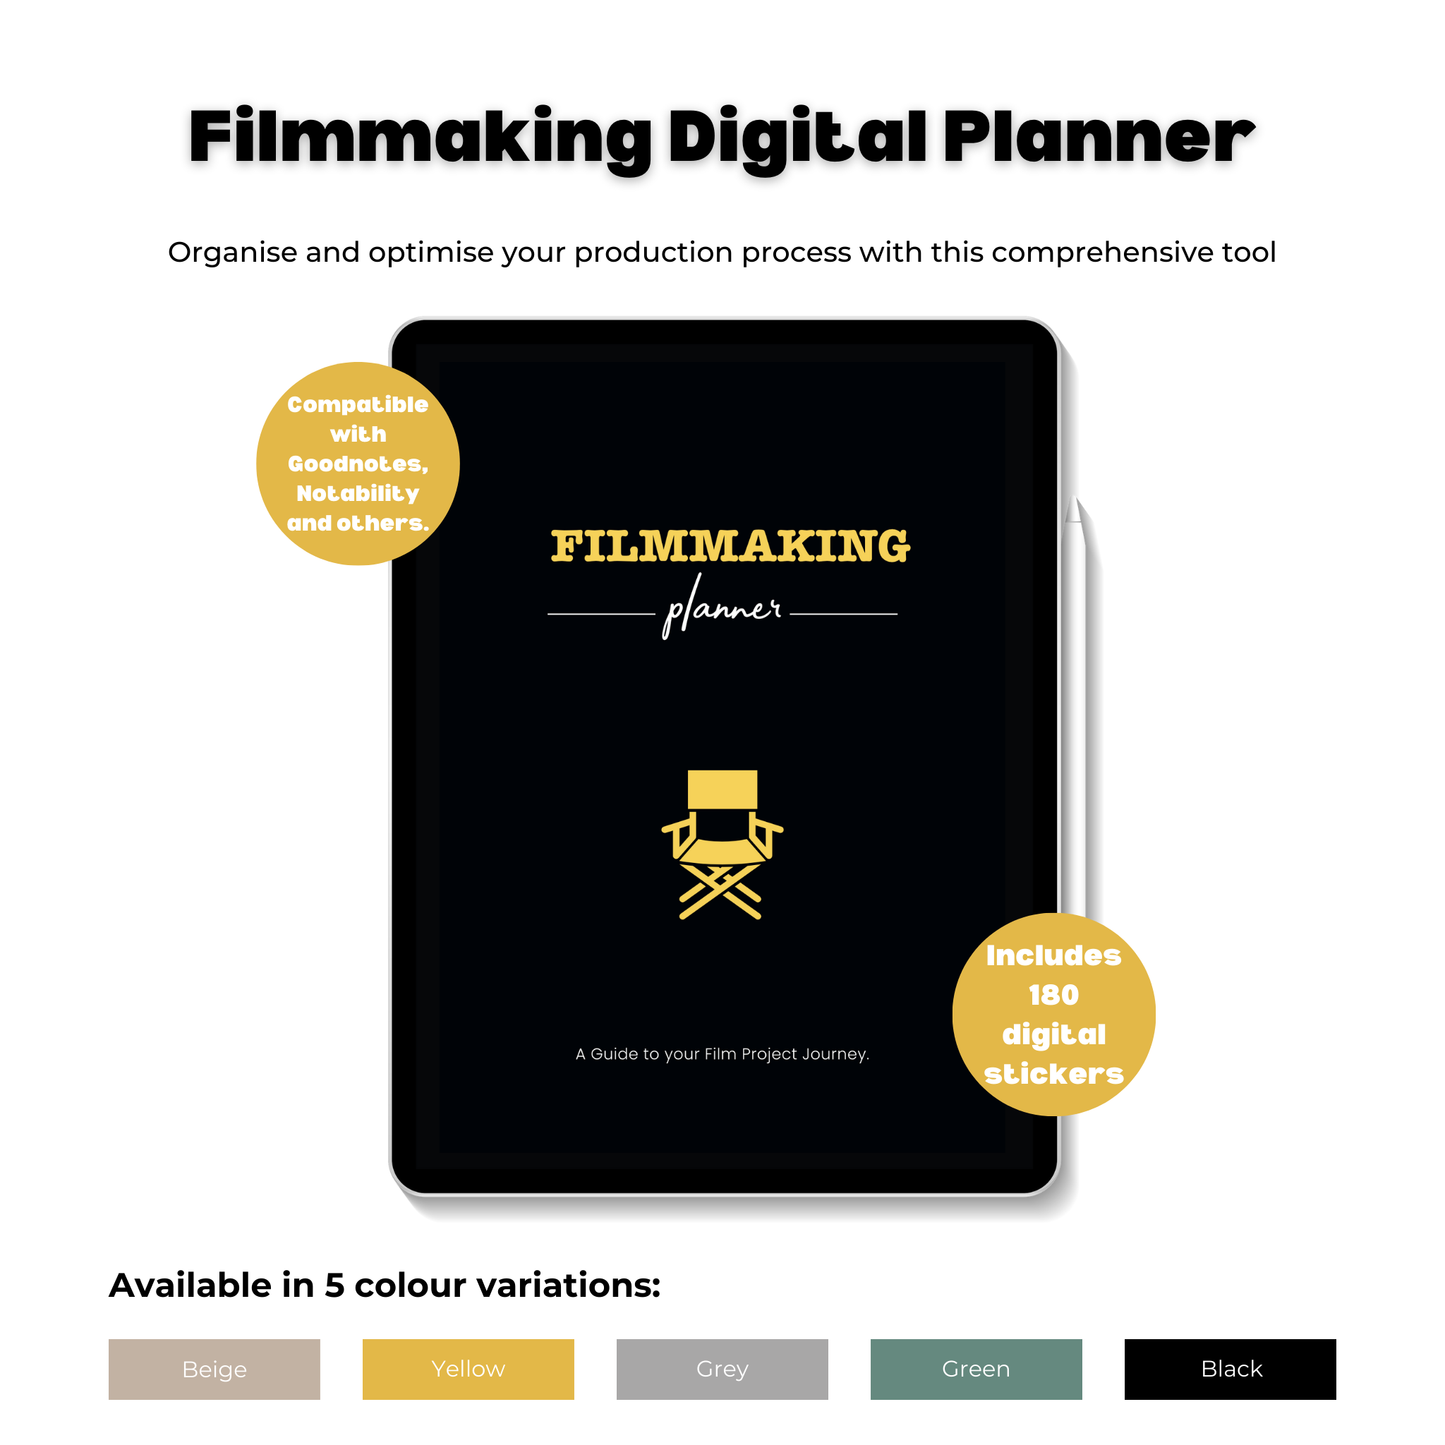 Filmmaking Digital Planner image showing yellow planner variation.